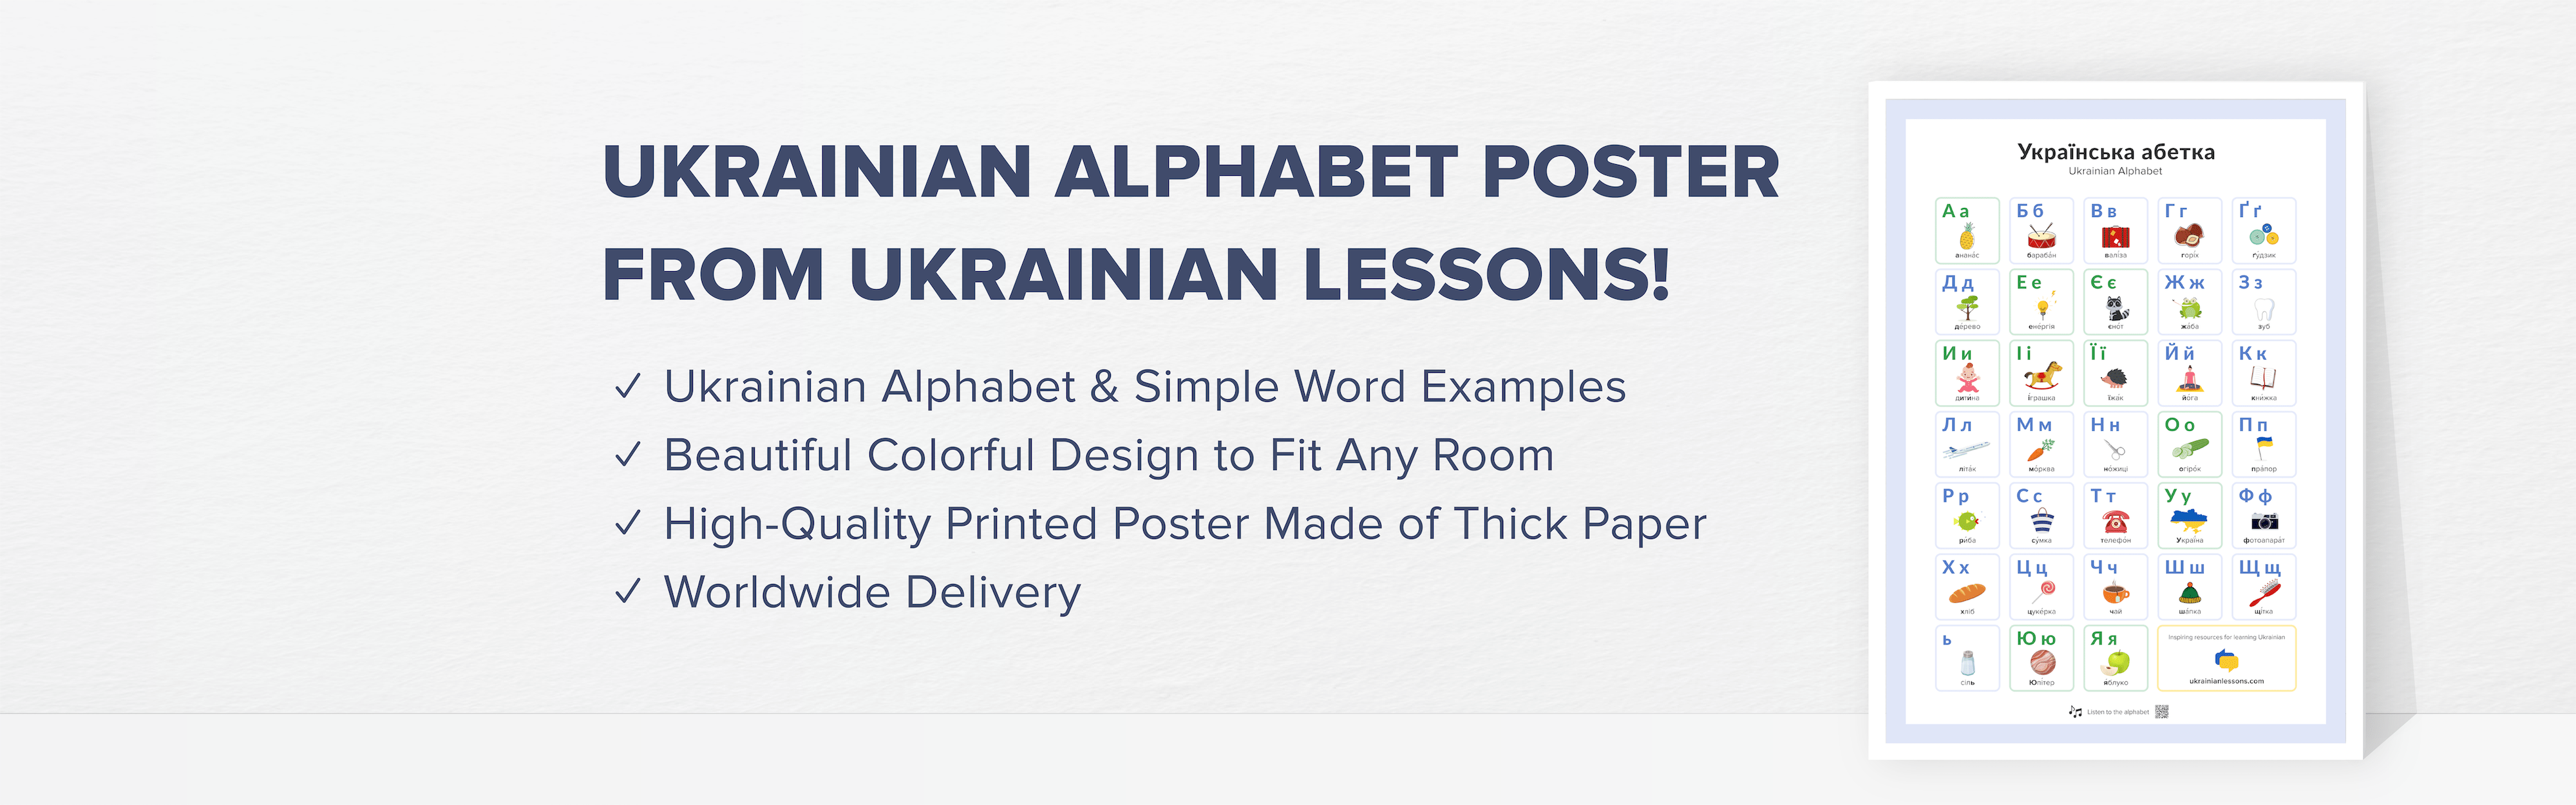 poster with Ukrainian alphabet